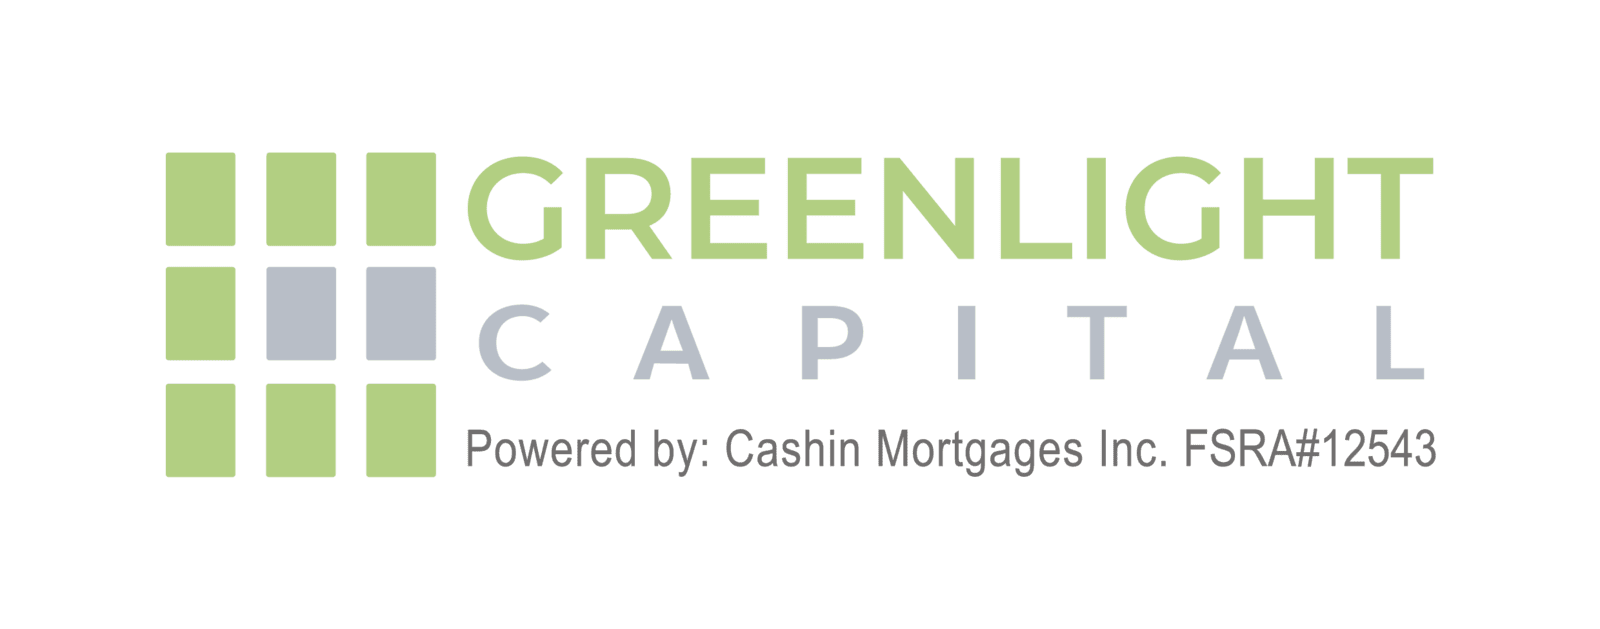 Greenlight Capital Landing Page